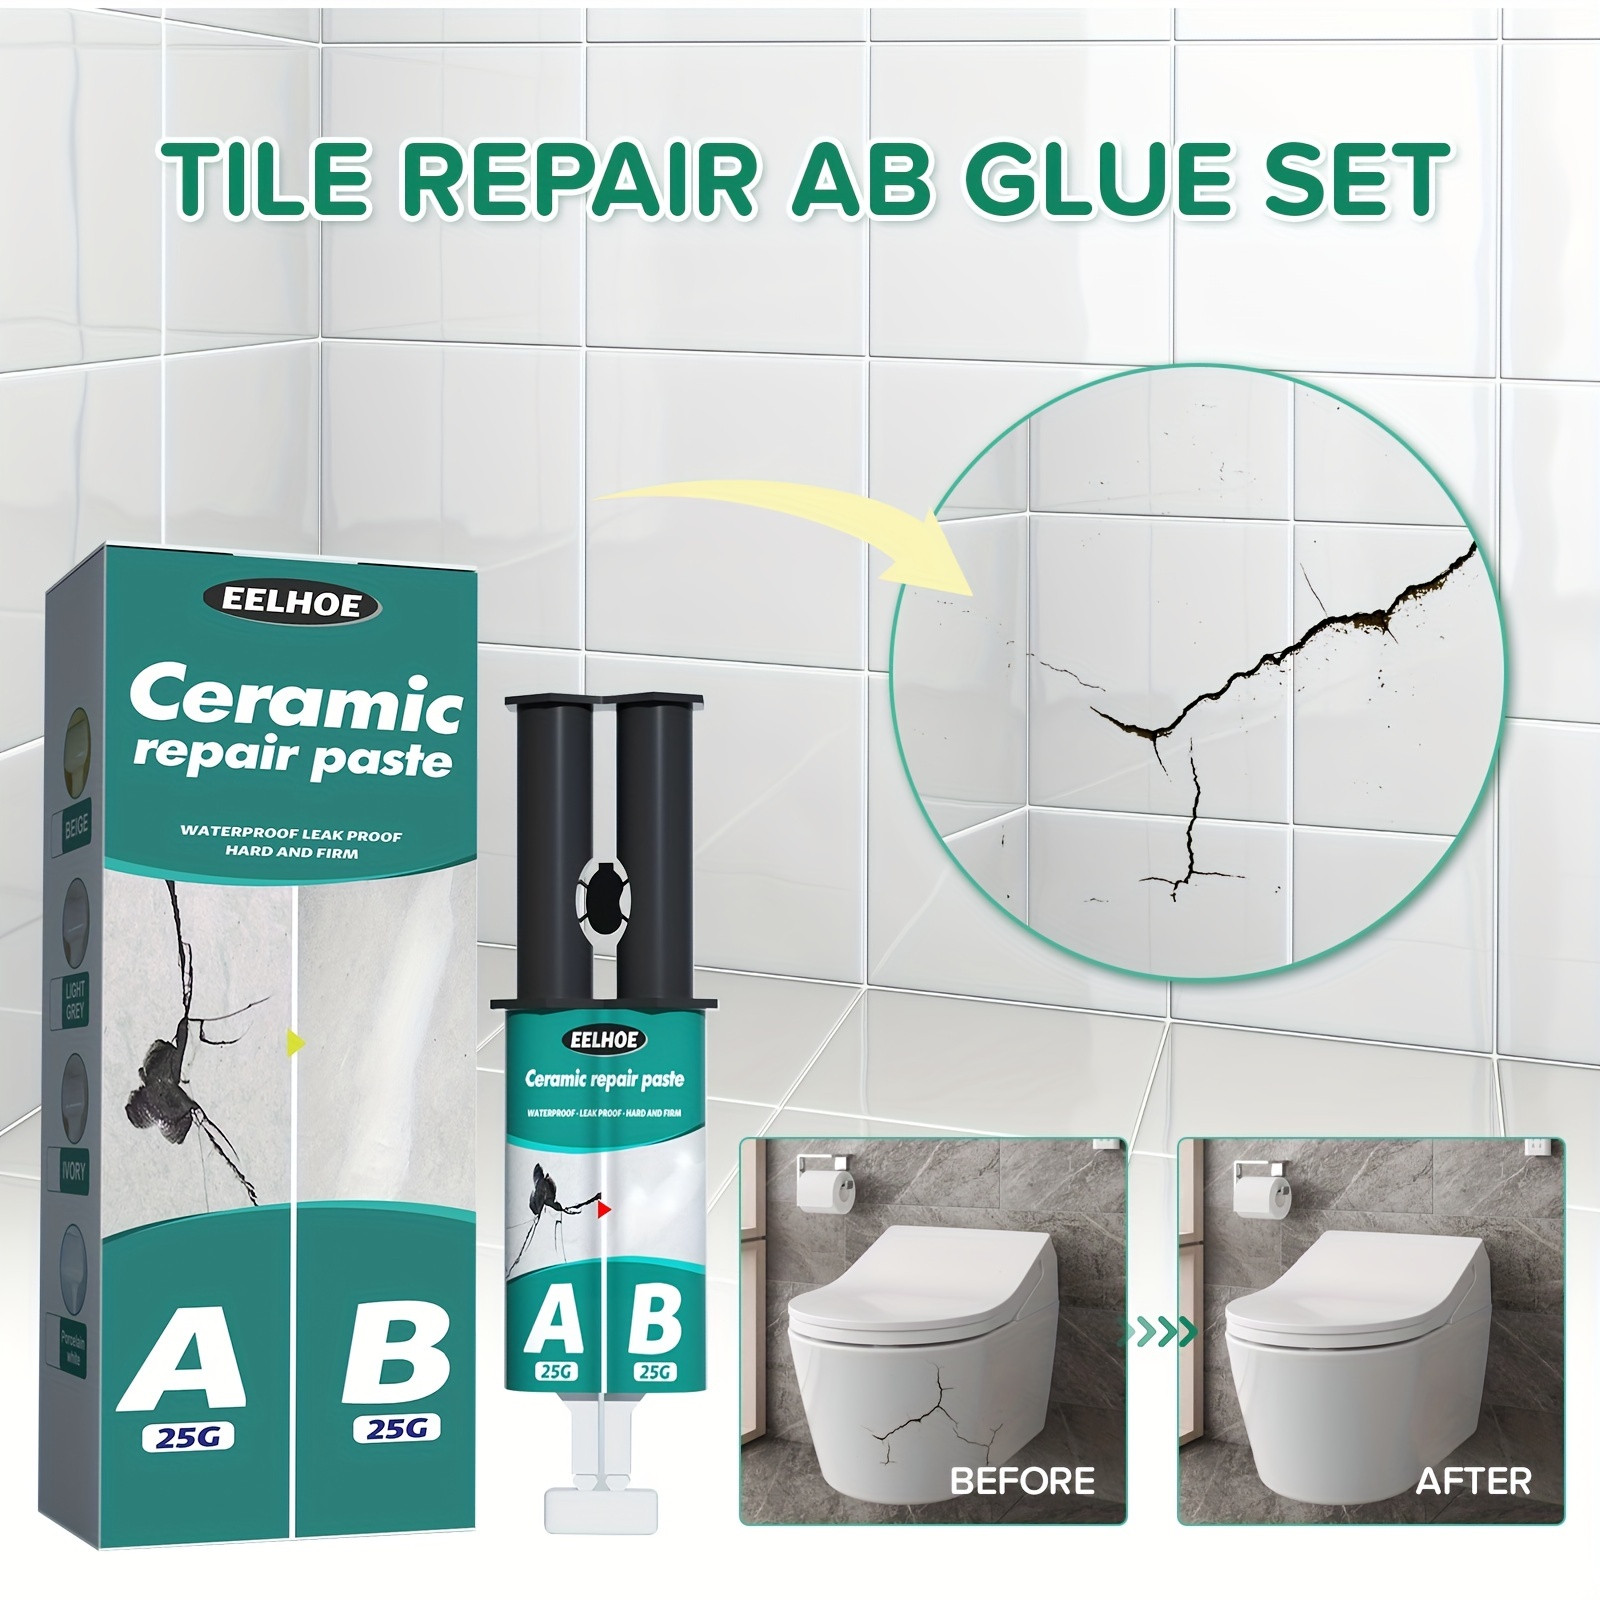 Tile Glue - Firm Tile Glue Adhesive For Bathroom Waterproof,100ml Tile  Repair Kit Household Ceramic Tile Glue For Kitchen, Bathroom, Shower, Pool,  Toi